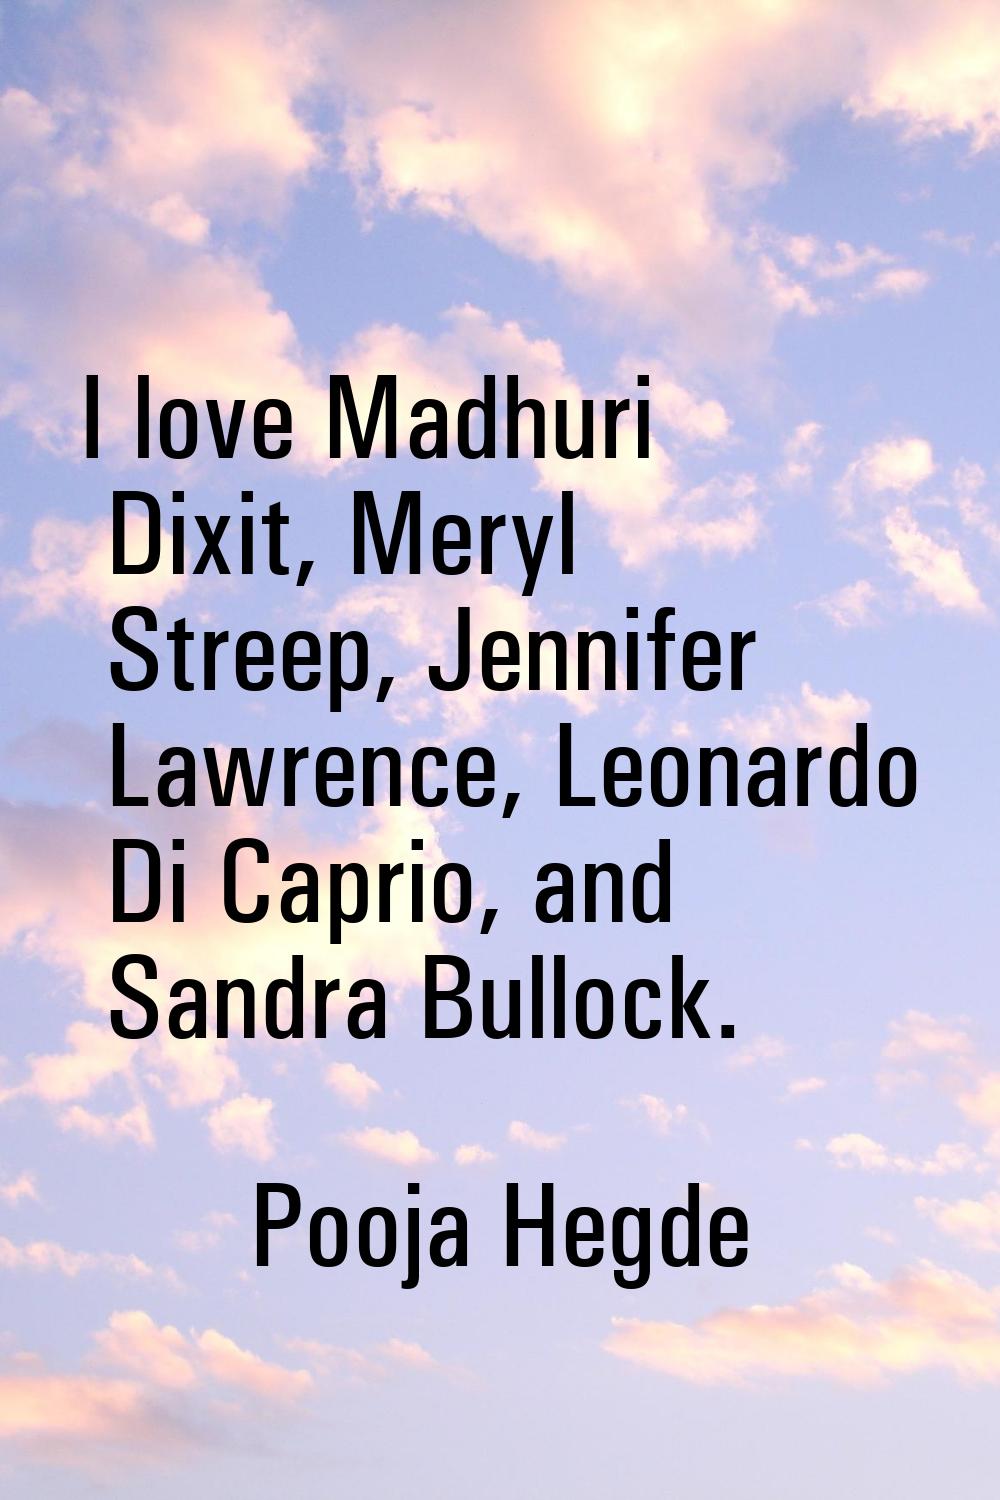 I love Madhuri Dixit, Meryl Streep, Jennifer Lawrence, Leonardo Di Caprio, and Sandra Bullock.